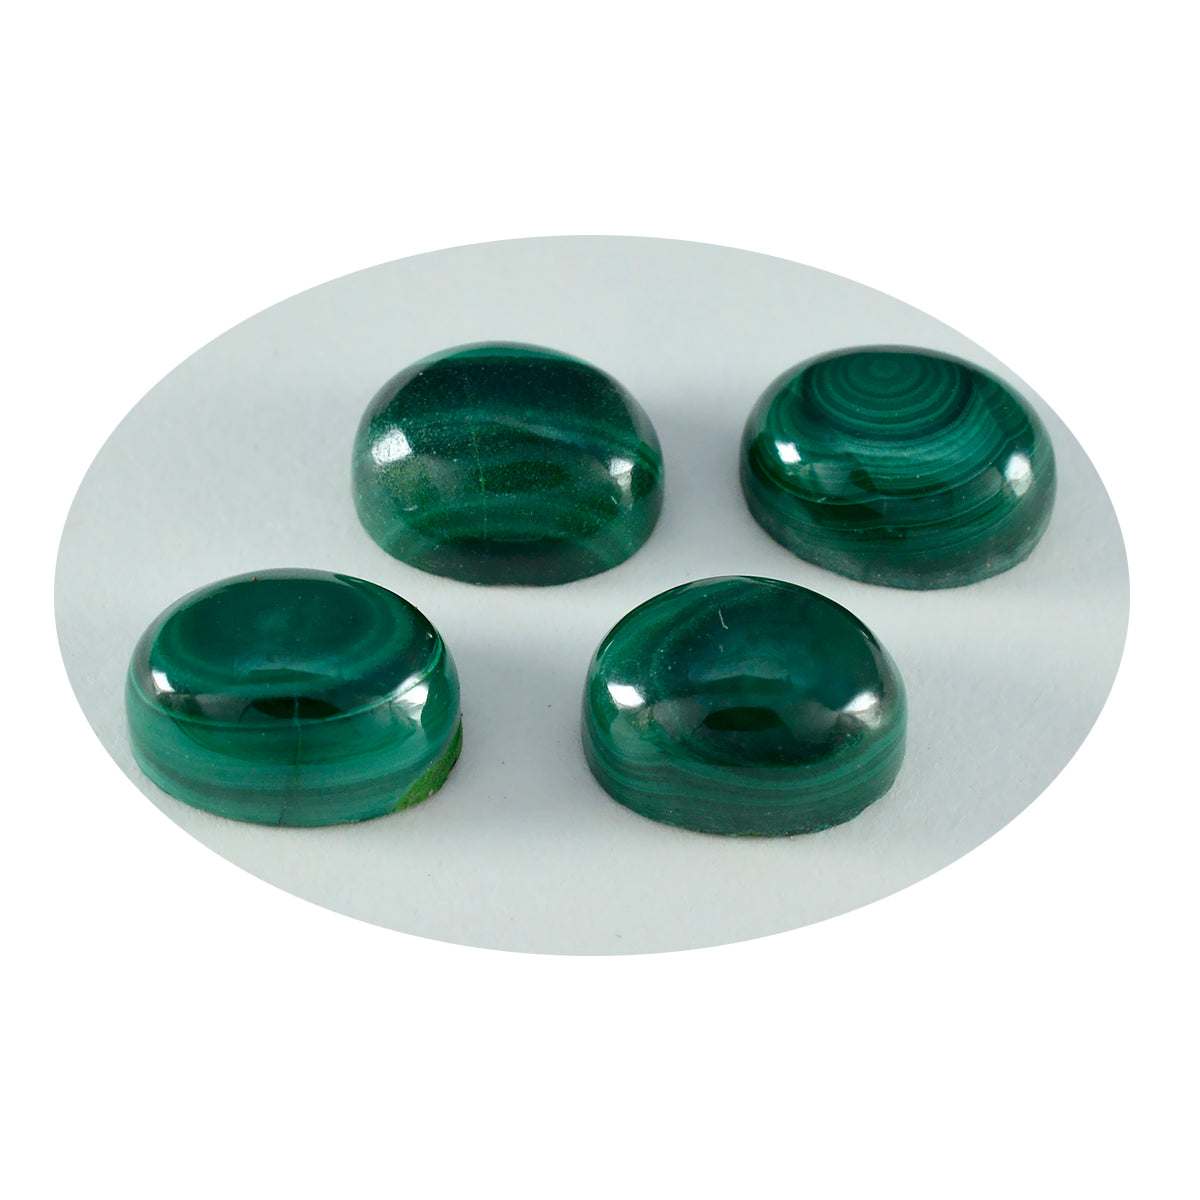 Riyogems 1 Stück grüner Malachit-Cabochon, 6 x 8 mm, ovale Form, toller Qualitätsstein